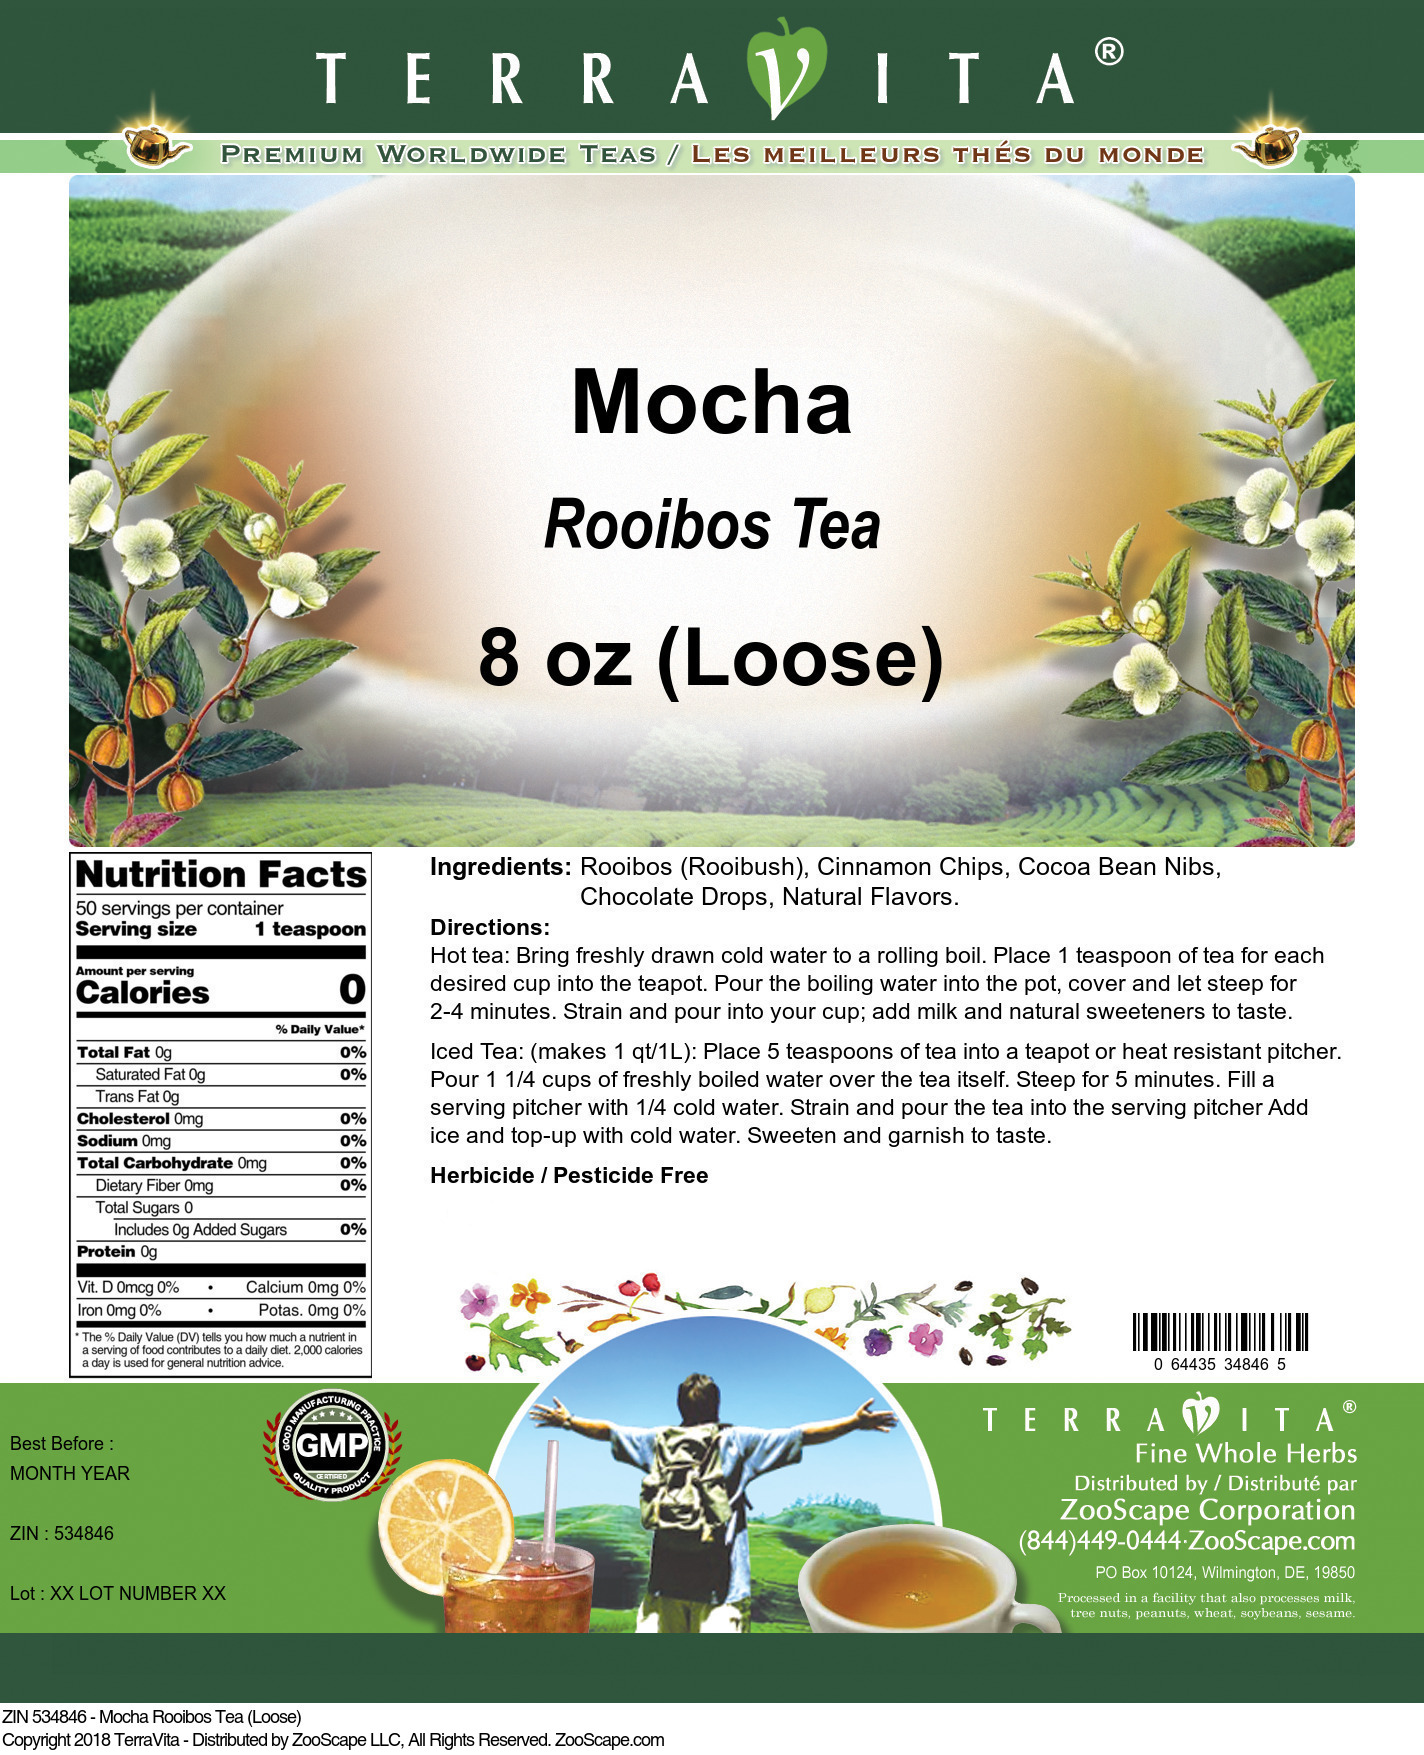 Mocha Rooibos Tea (Loose) - Label